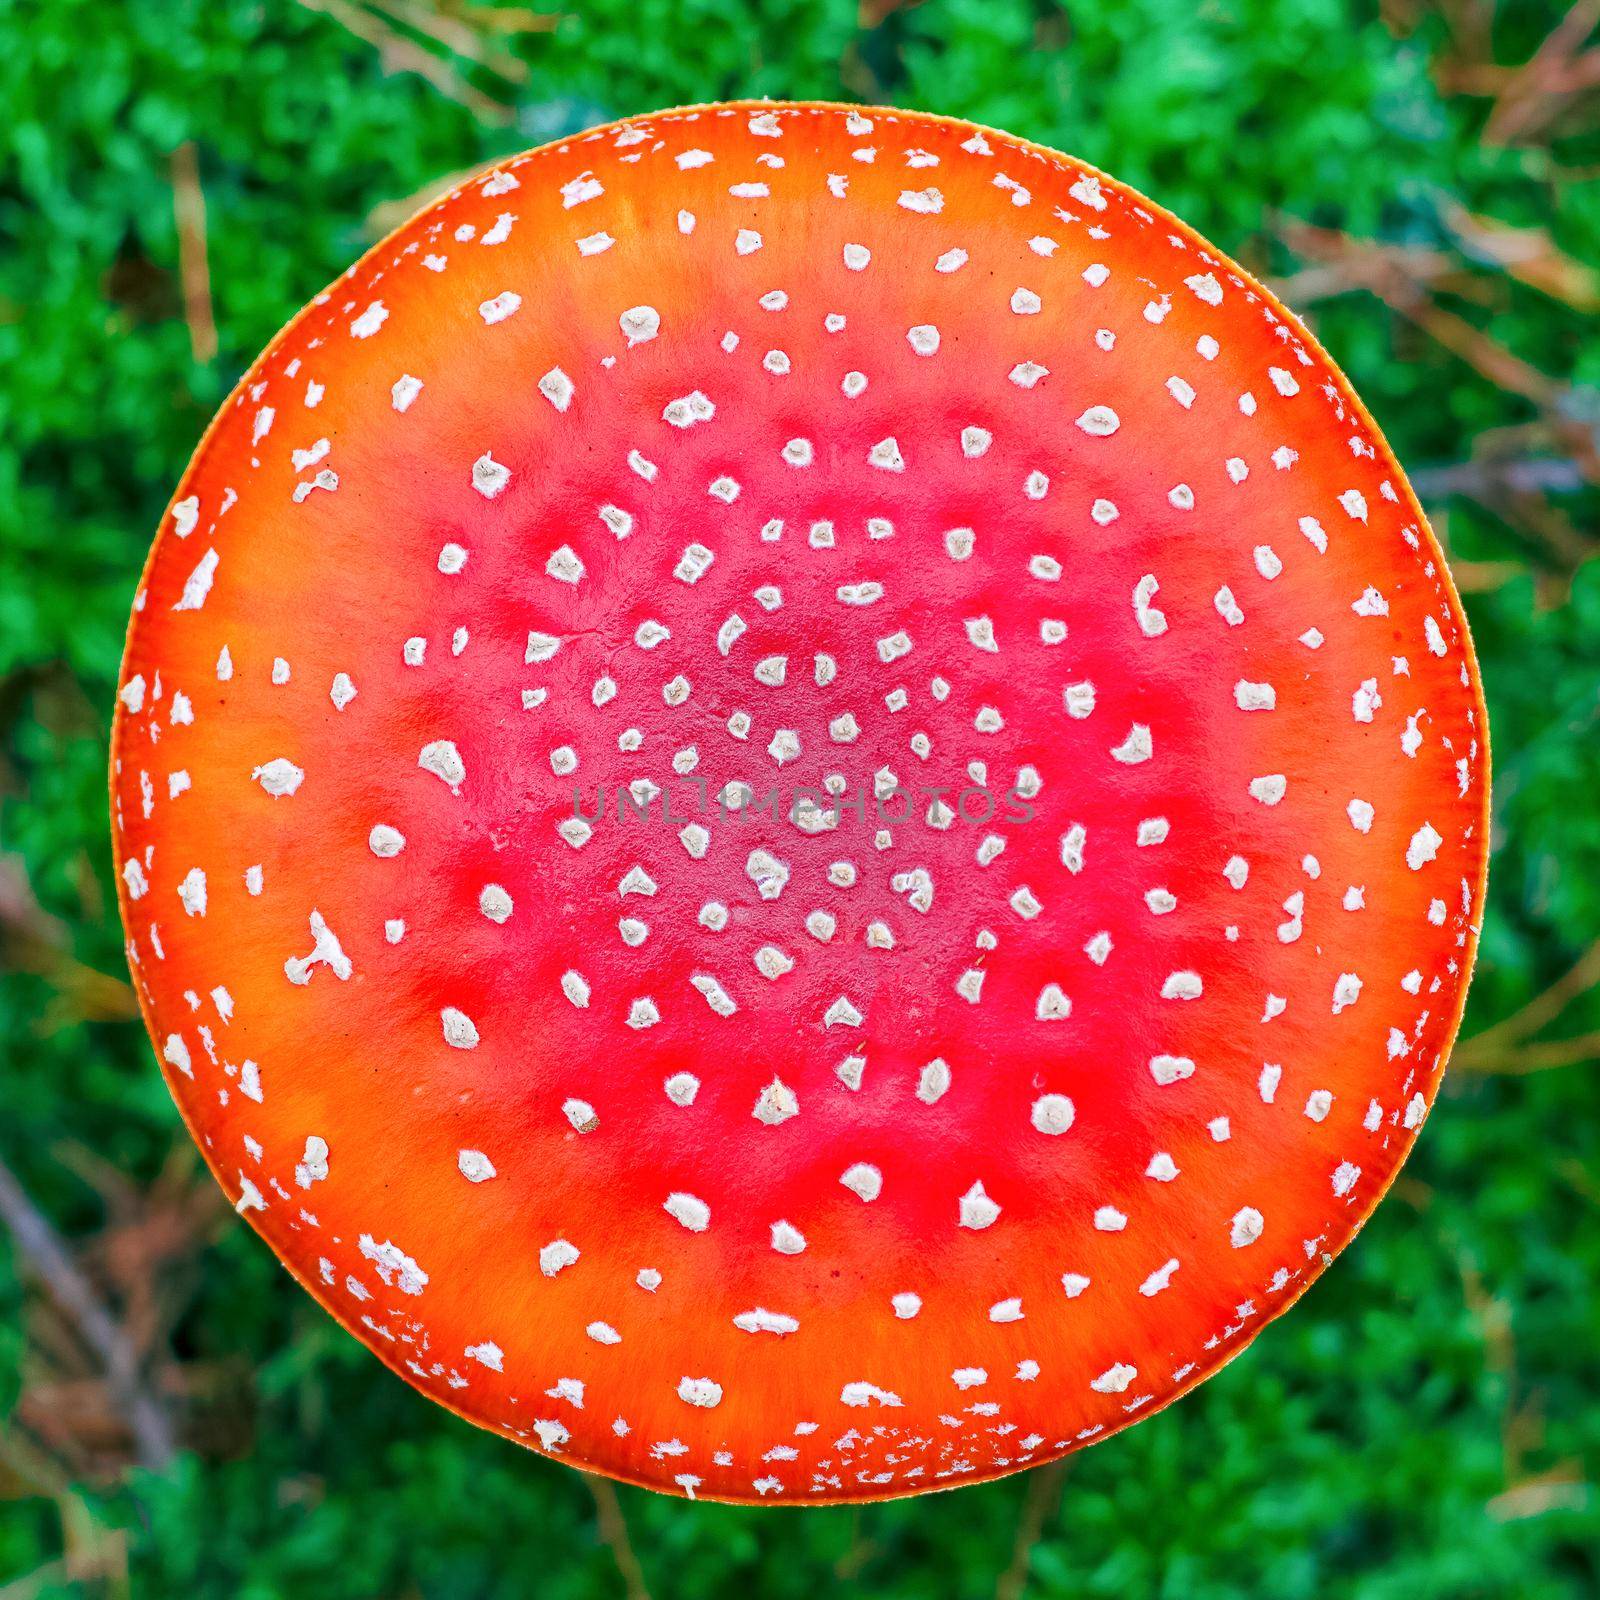 Amanita Muscaria poisonous mushroom by InfinitumProdux